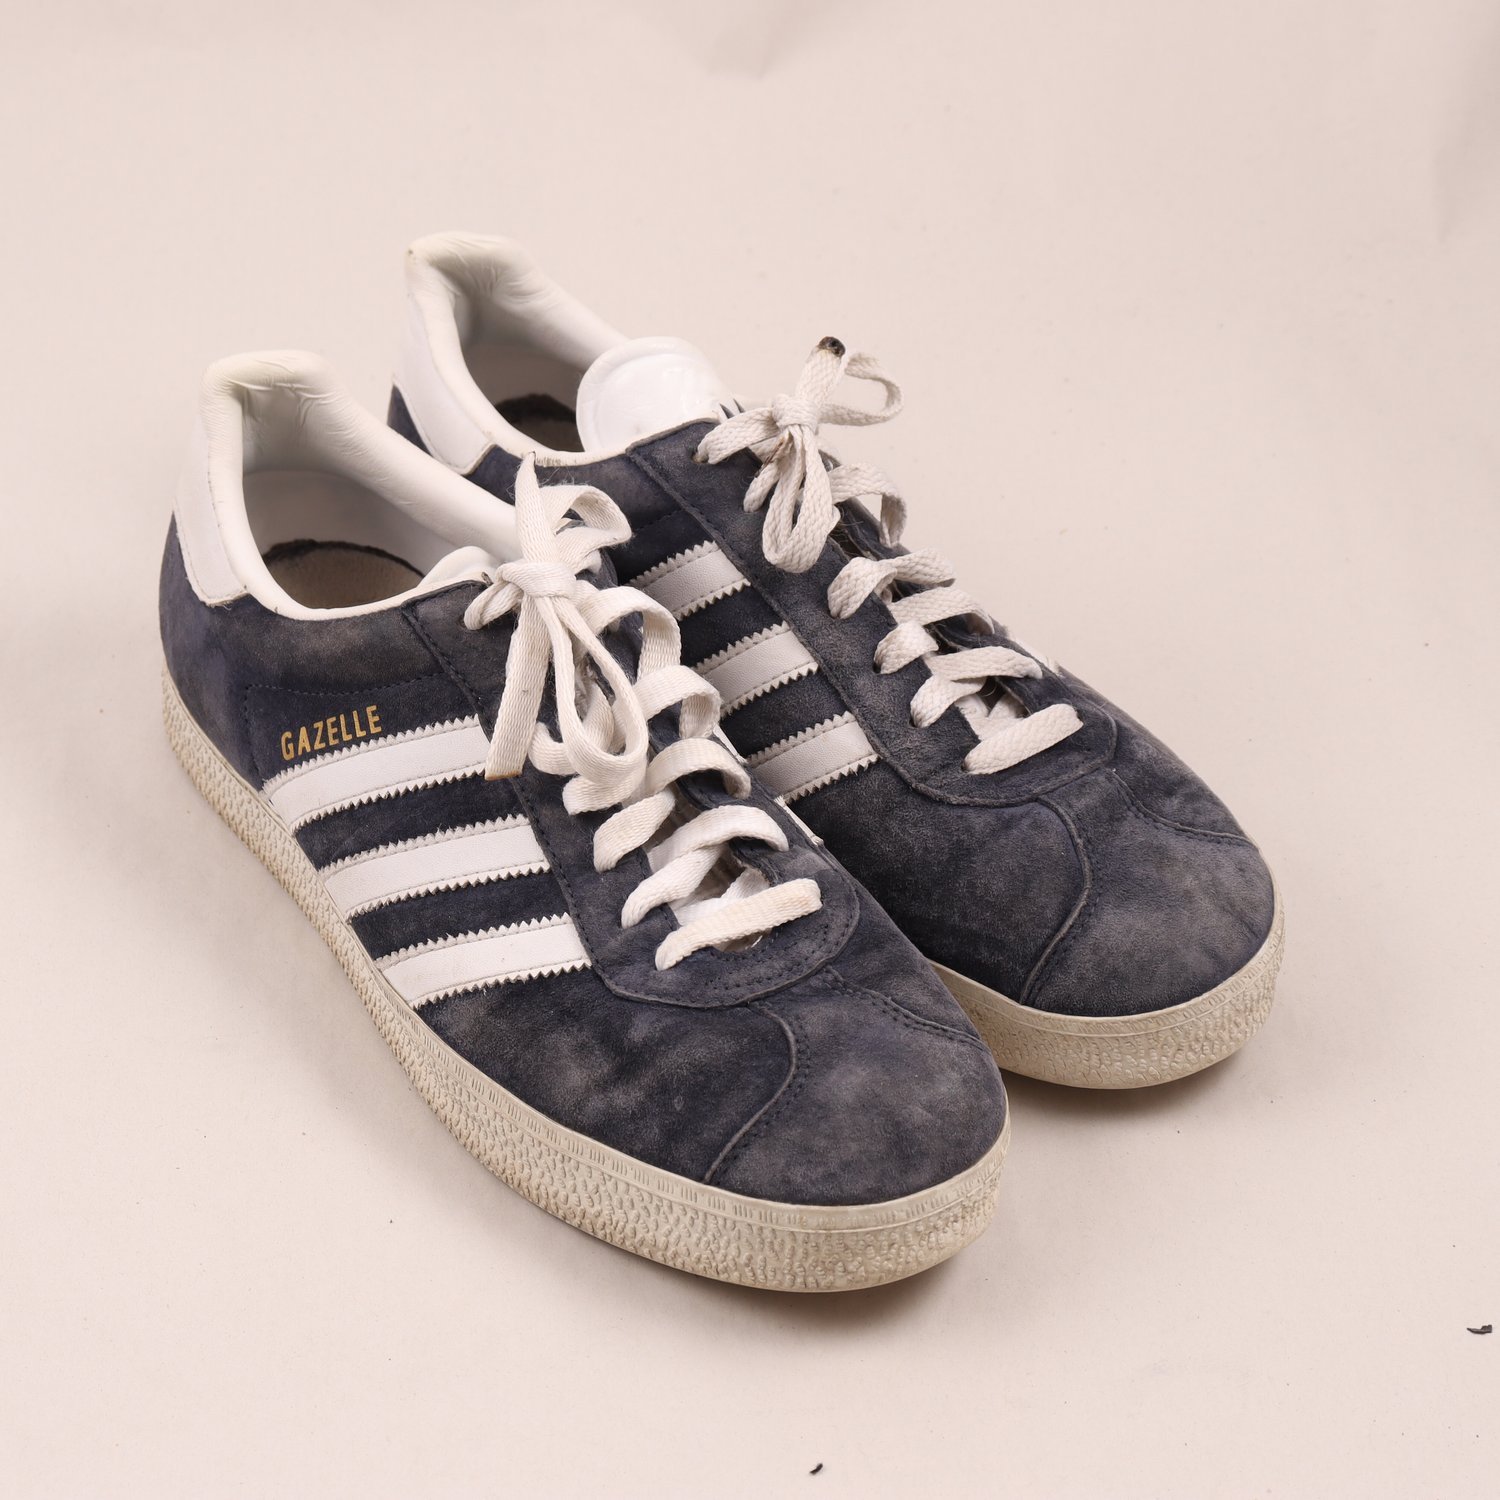 Sneakers, Adidas Gazelle, stl. 42 (UK 8)